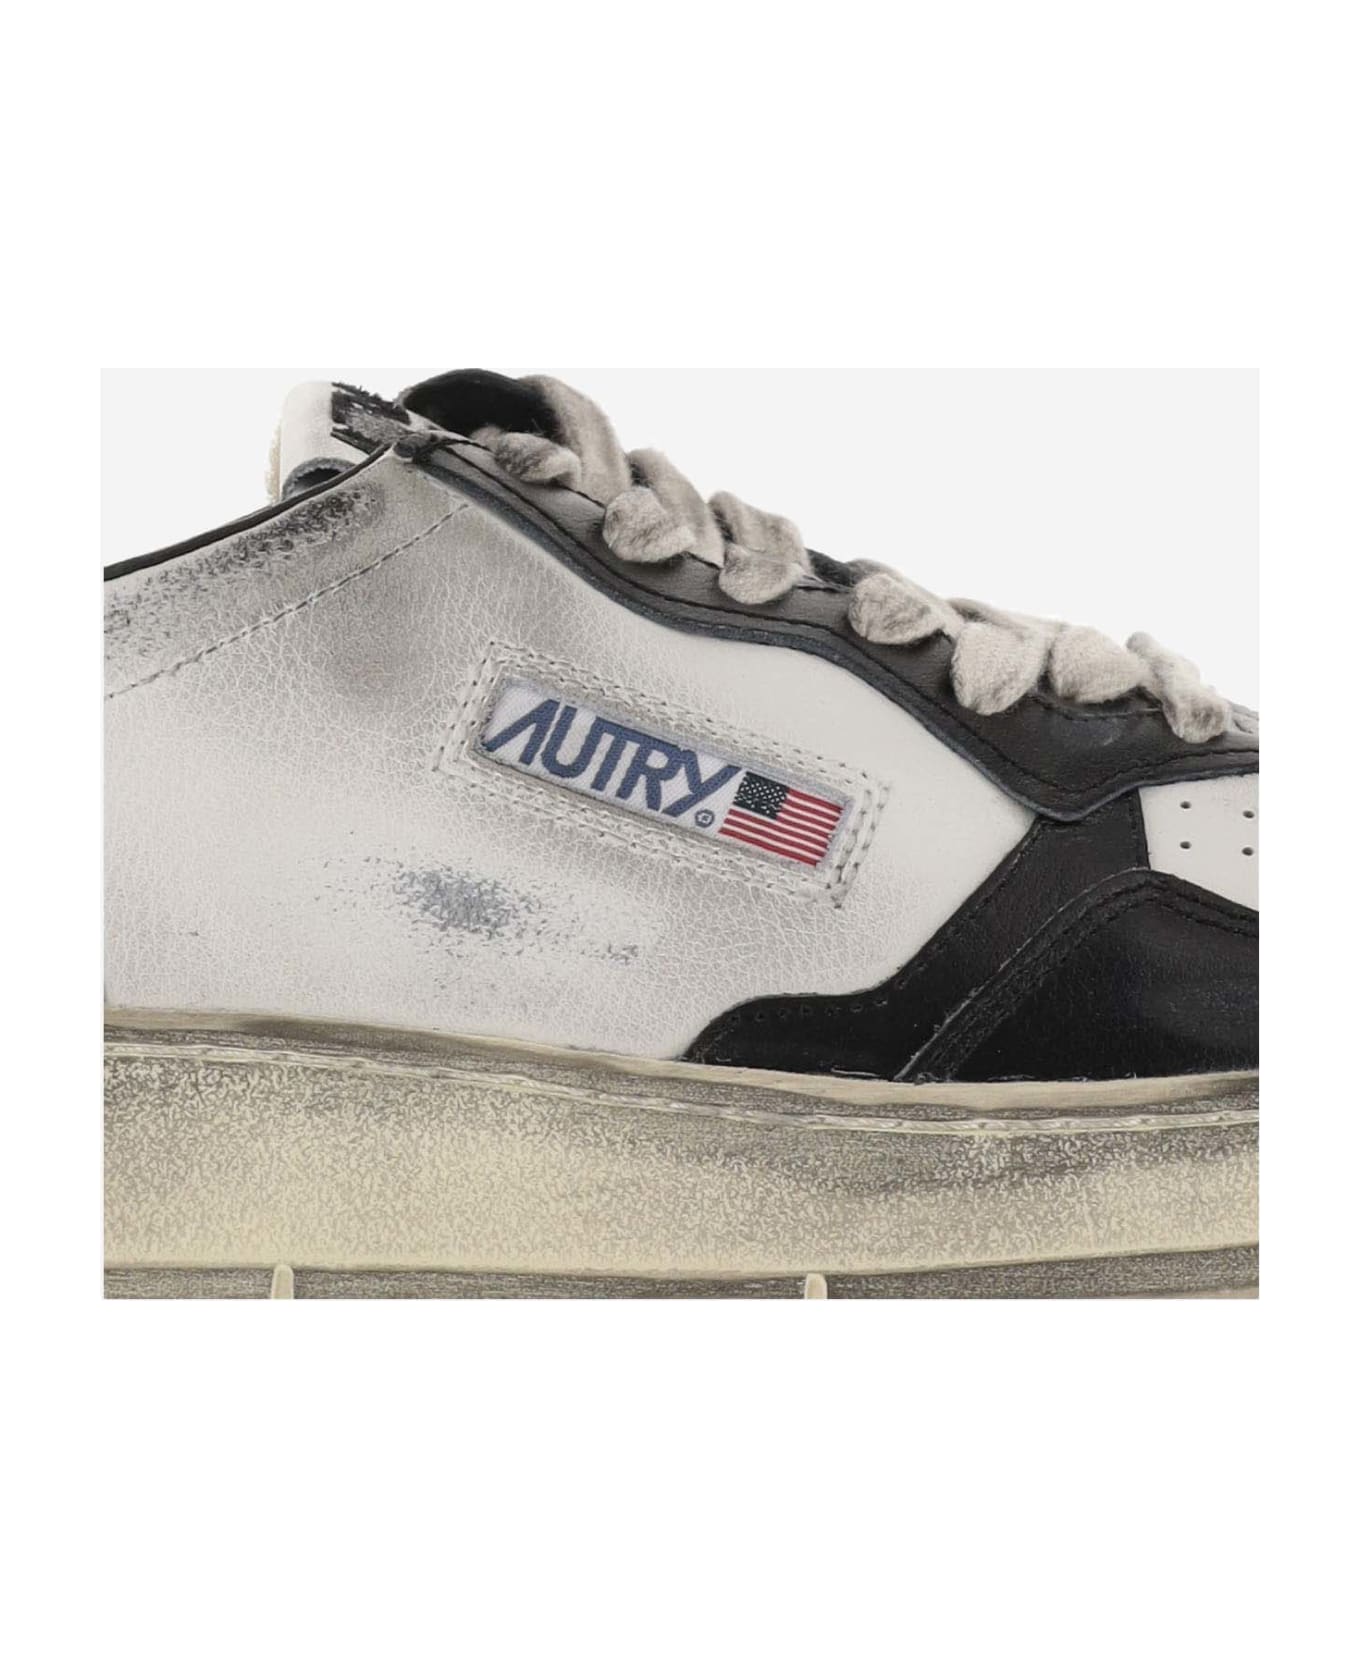 Autry Super Vintage Sneakers - White Black Platino